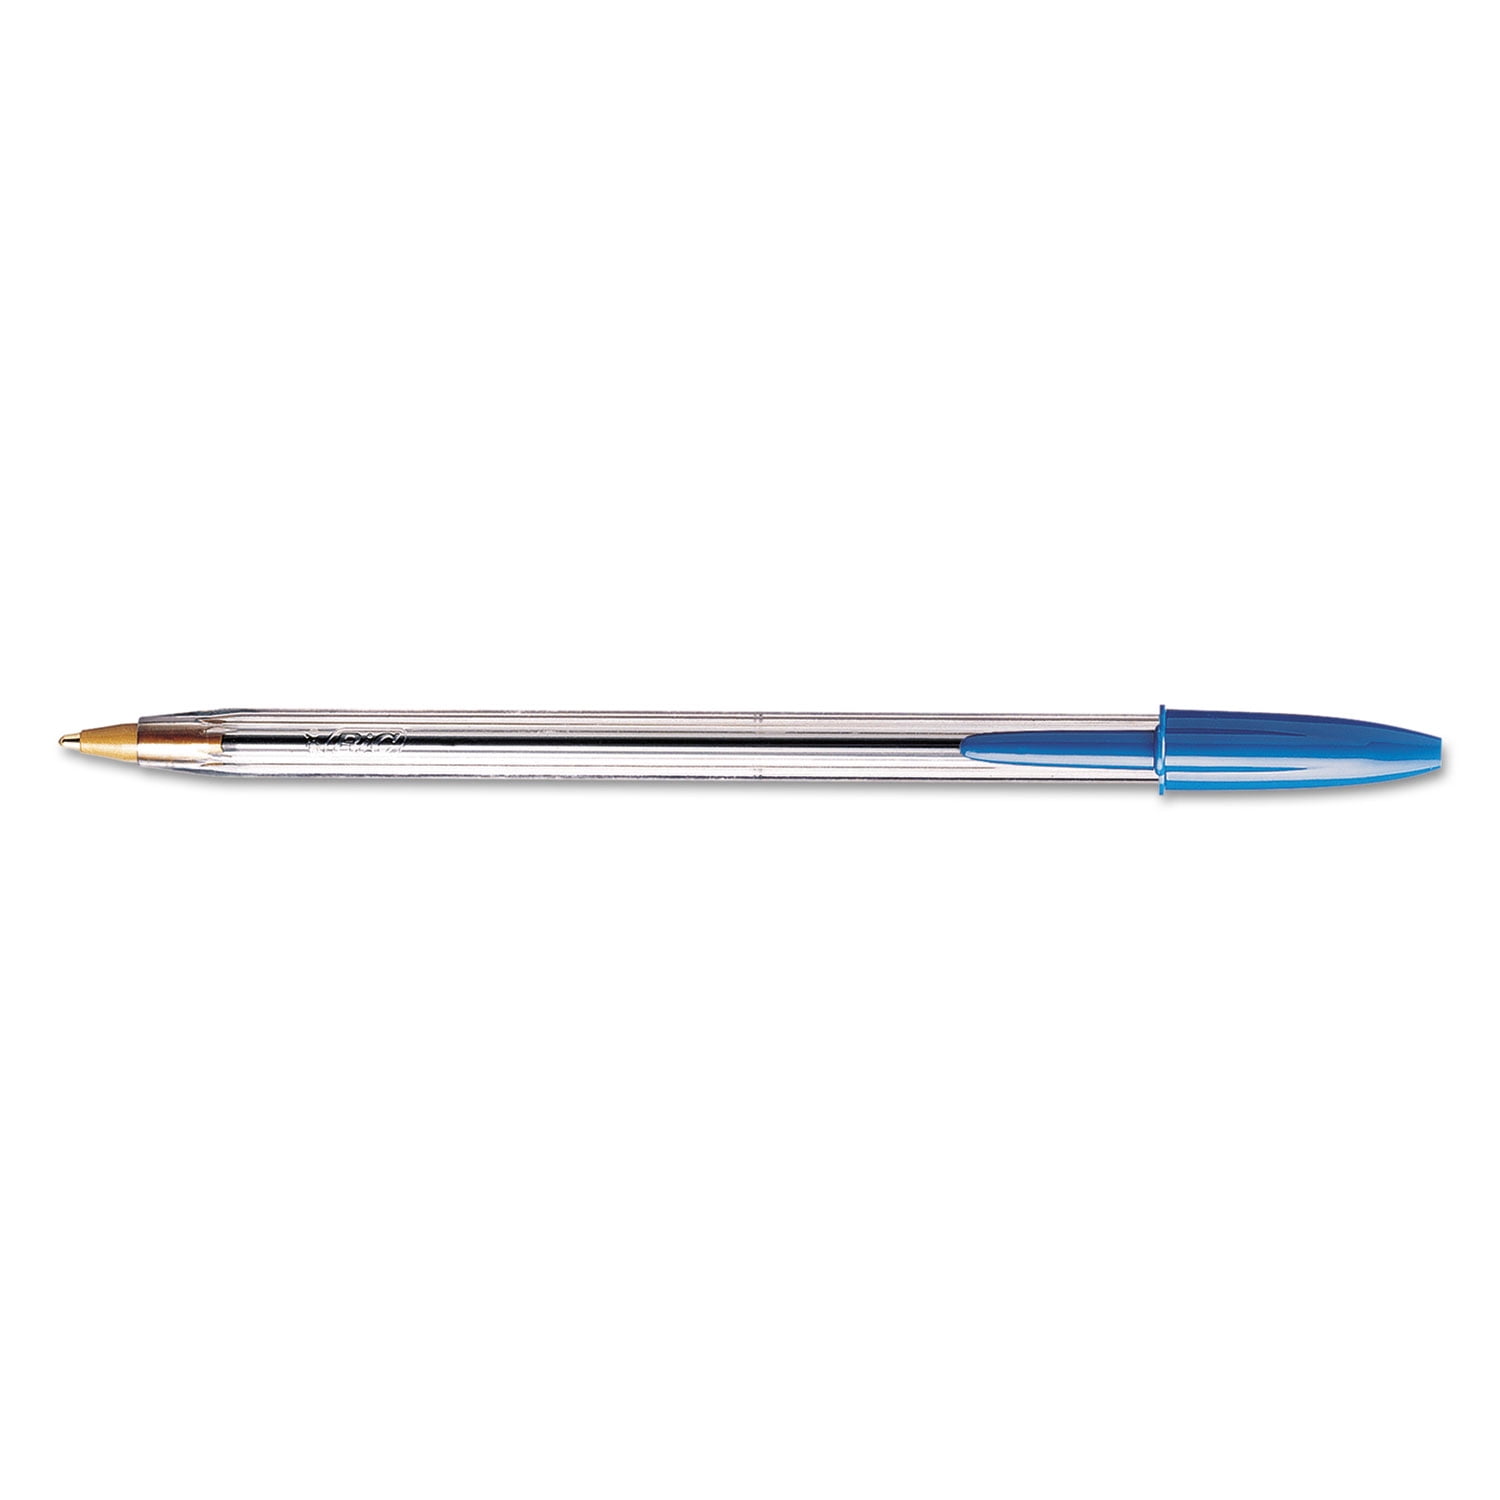 Bic Cristal Soft Medium ASST Ball Pens, BLUE/BLACK(7 PENS+POCKET+CORRECTION  PEN)